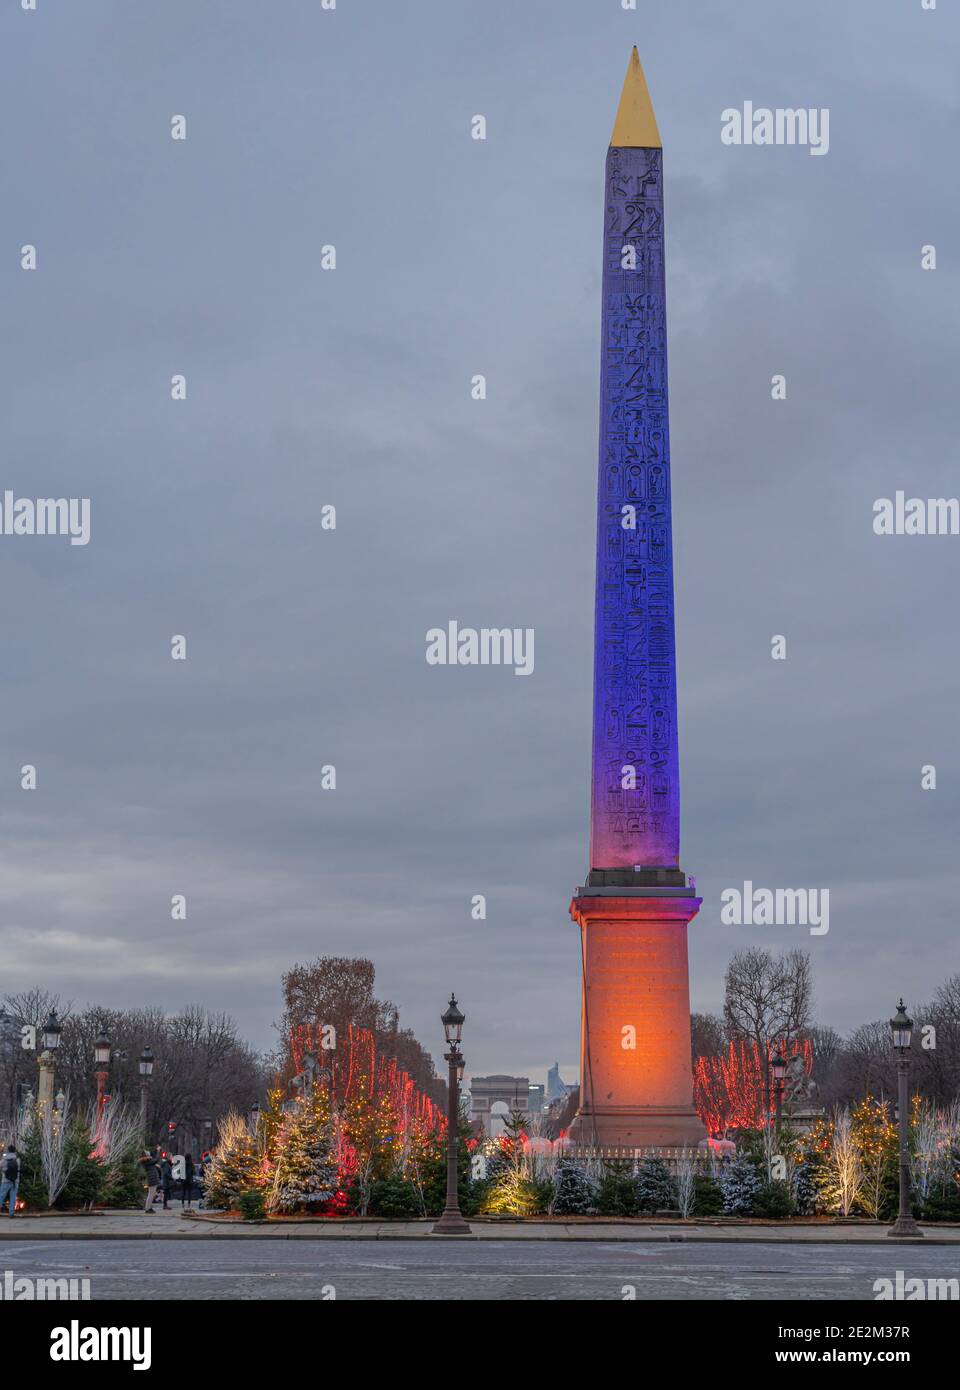 Paris,France - 12 30 2020: View of the Obelisk and the Arc De Triomphe on Place de la Concorde with Christmas lights Stock Photo